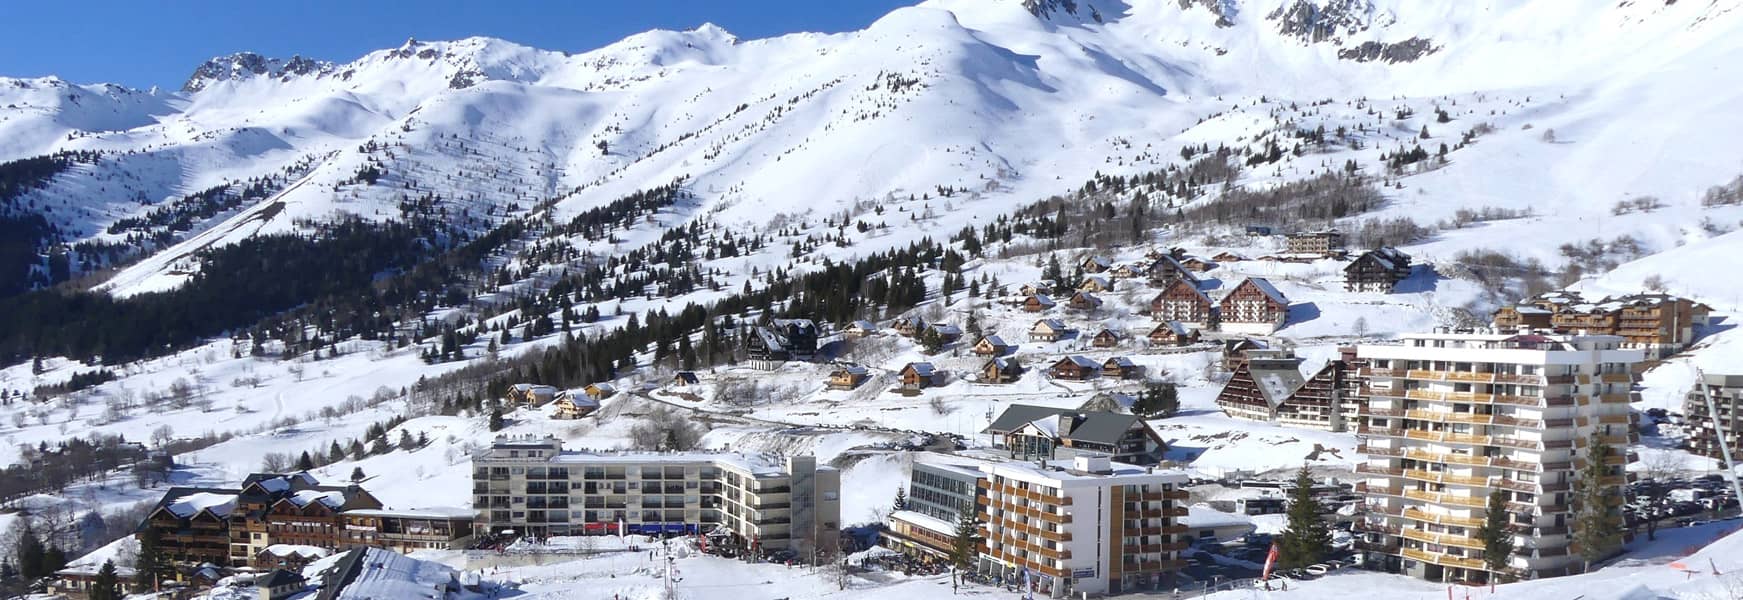 Location Ski Intersport Saint François Longchamp